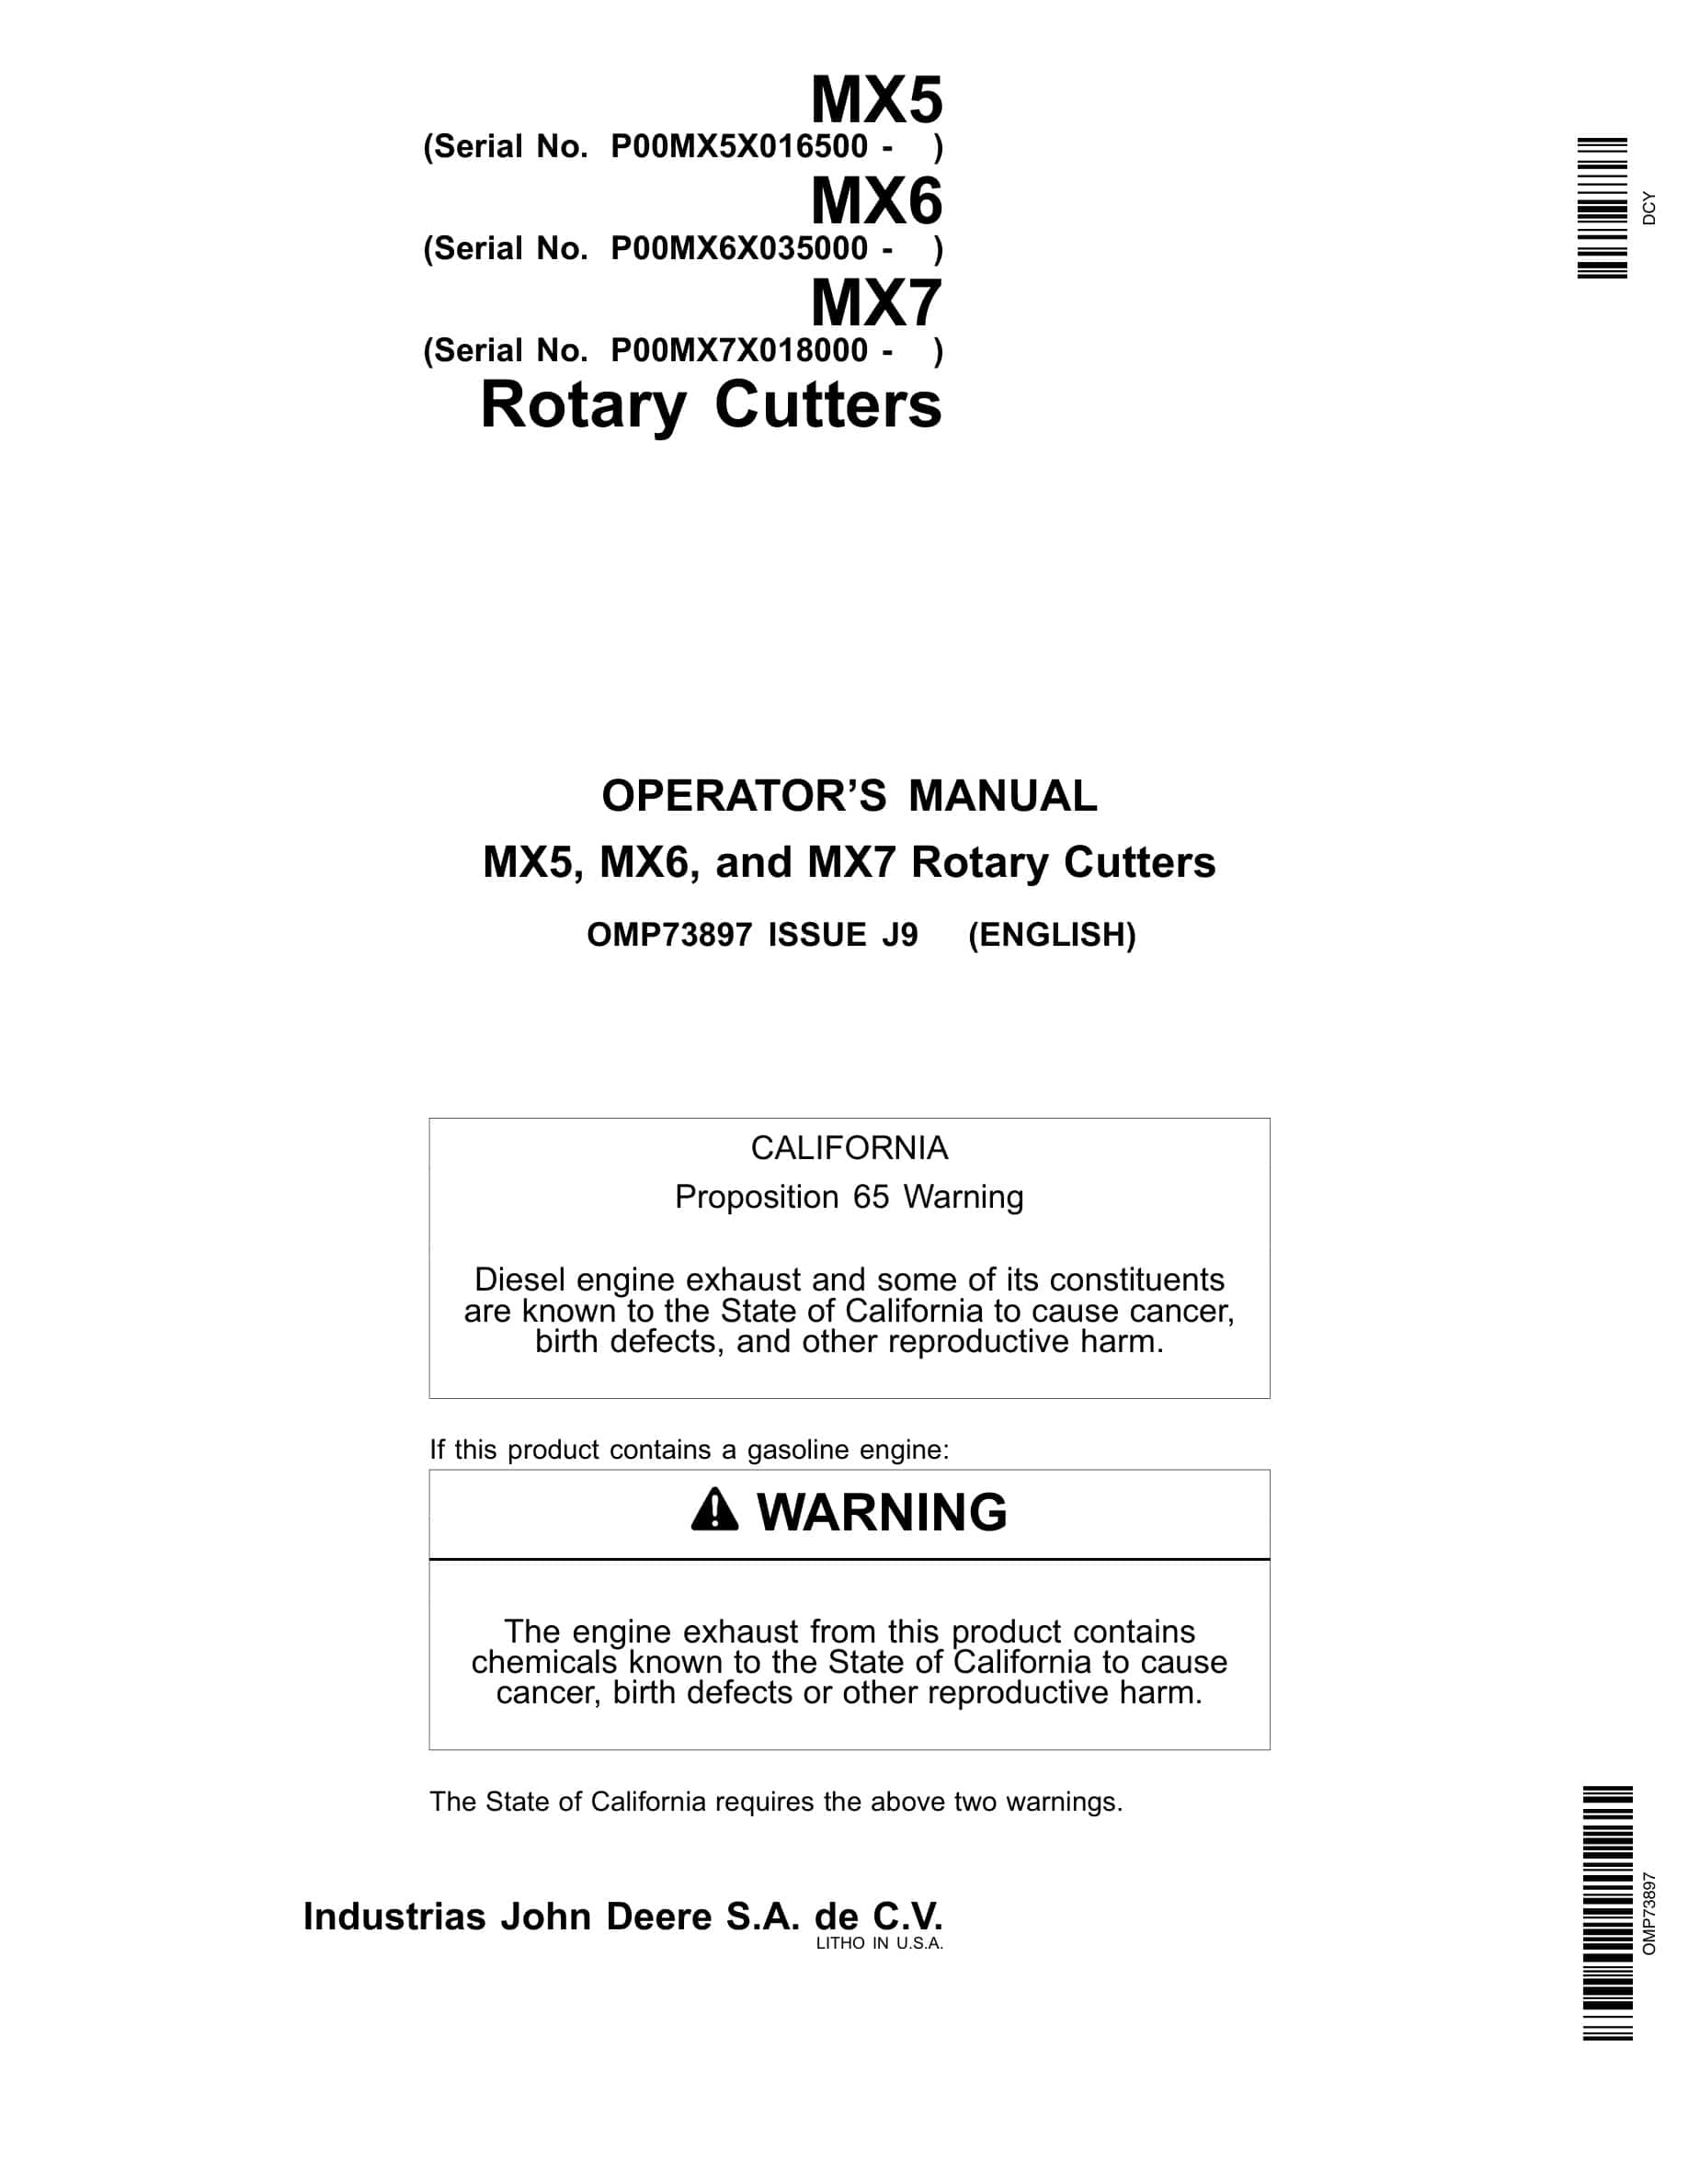 John Deere MX5, MX6, MX7 Rotary Cutter Operator Manual OMP73897-1